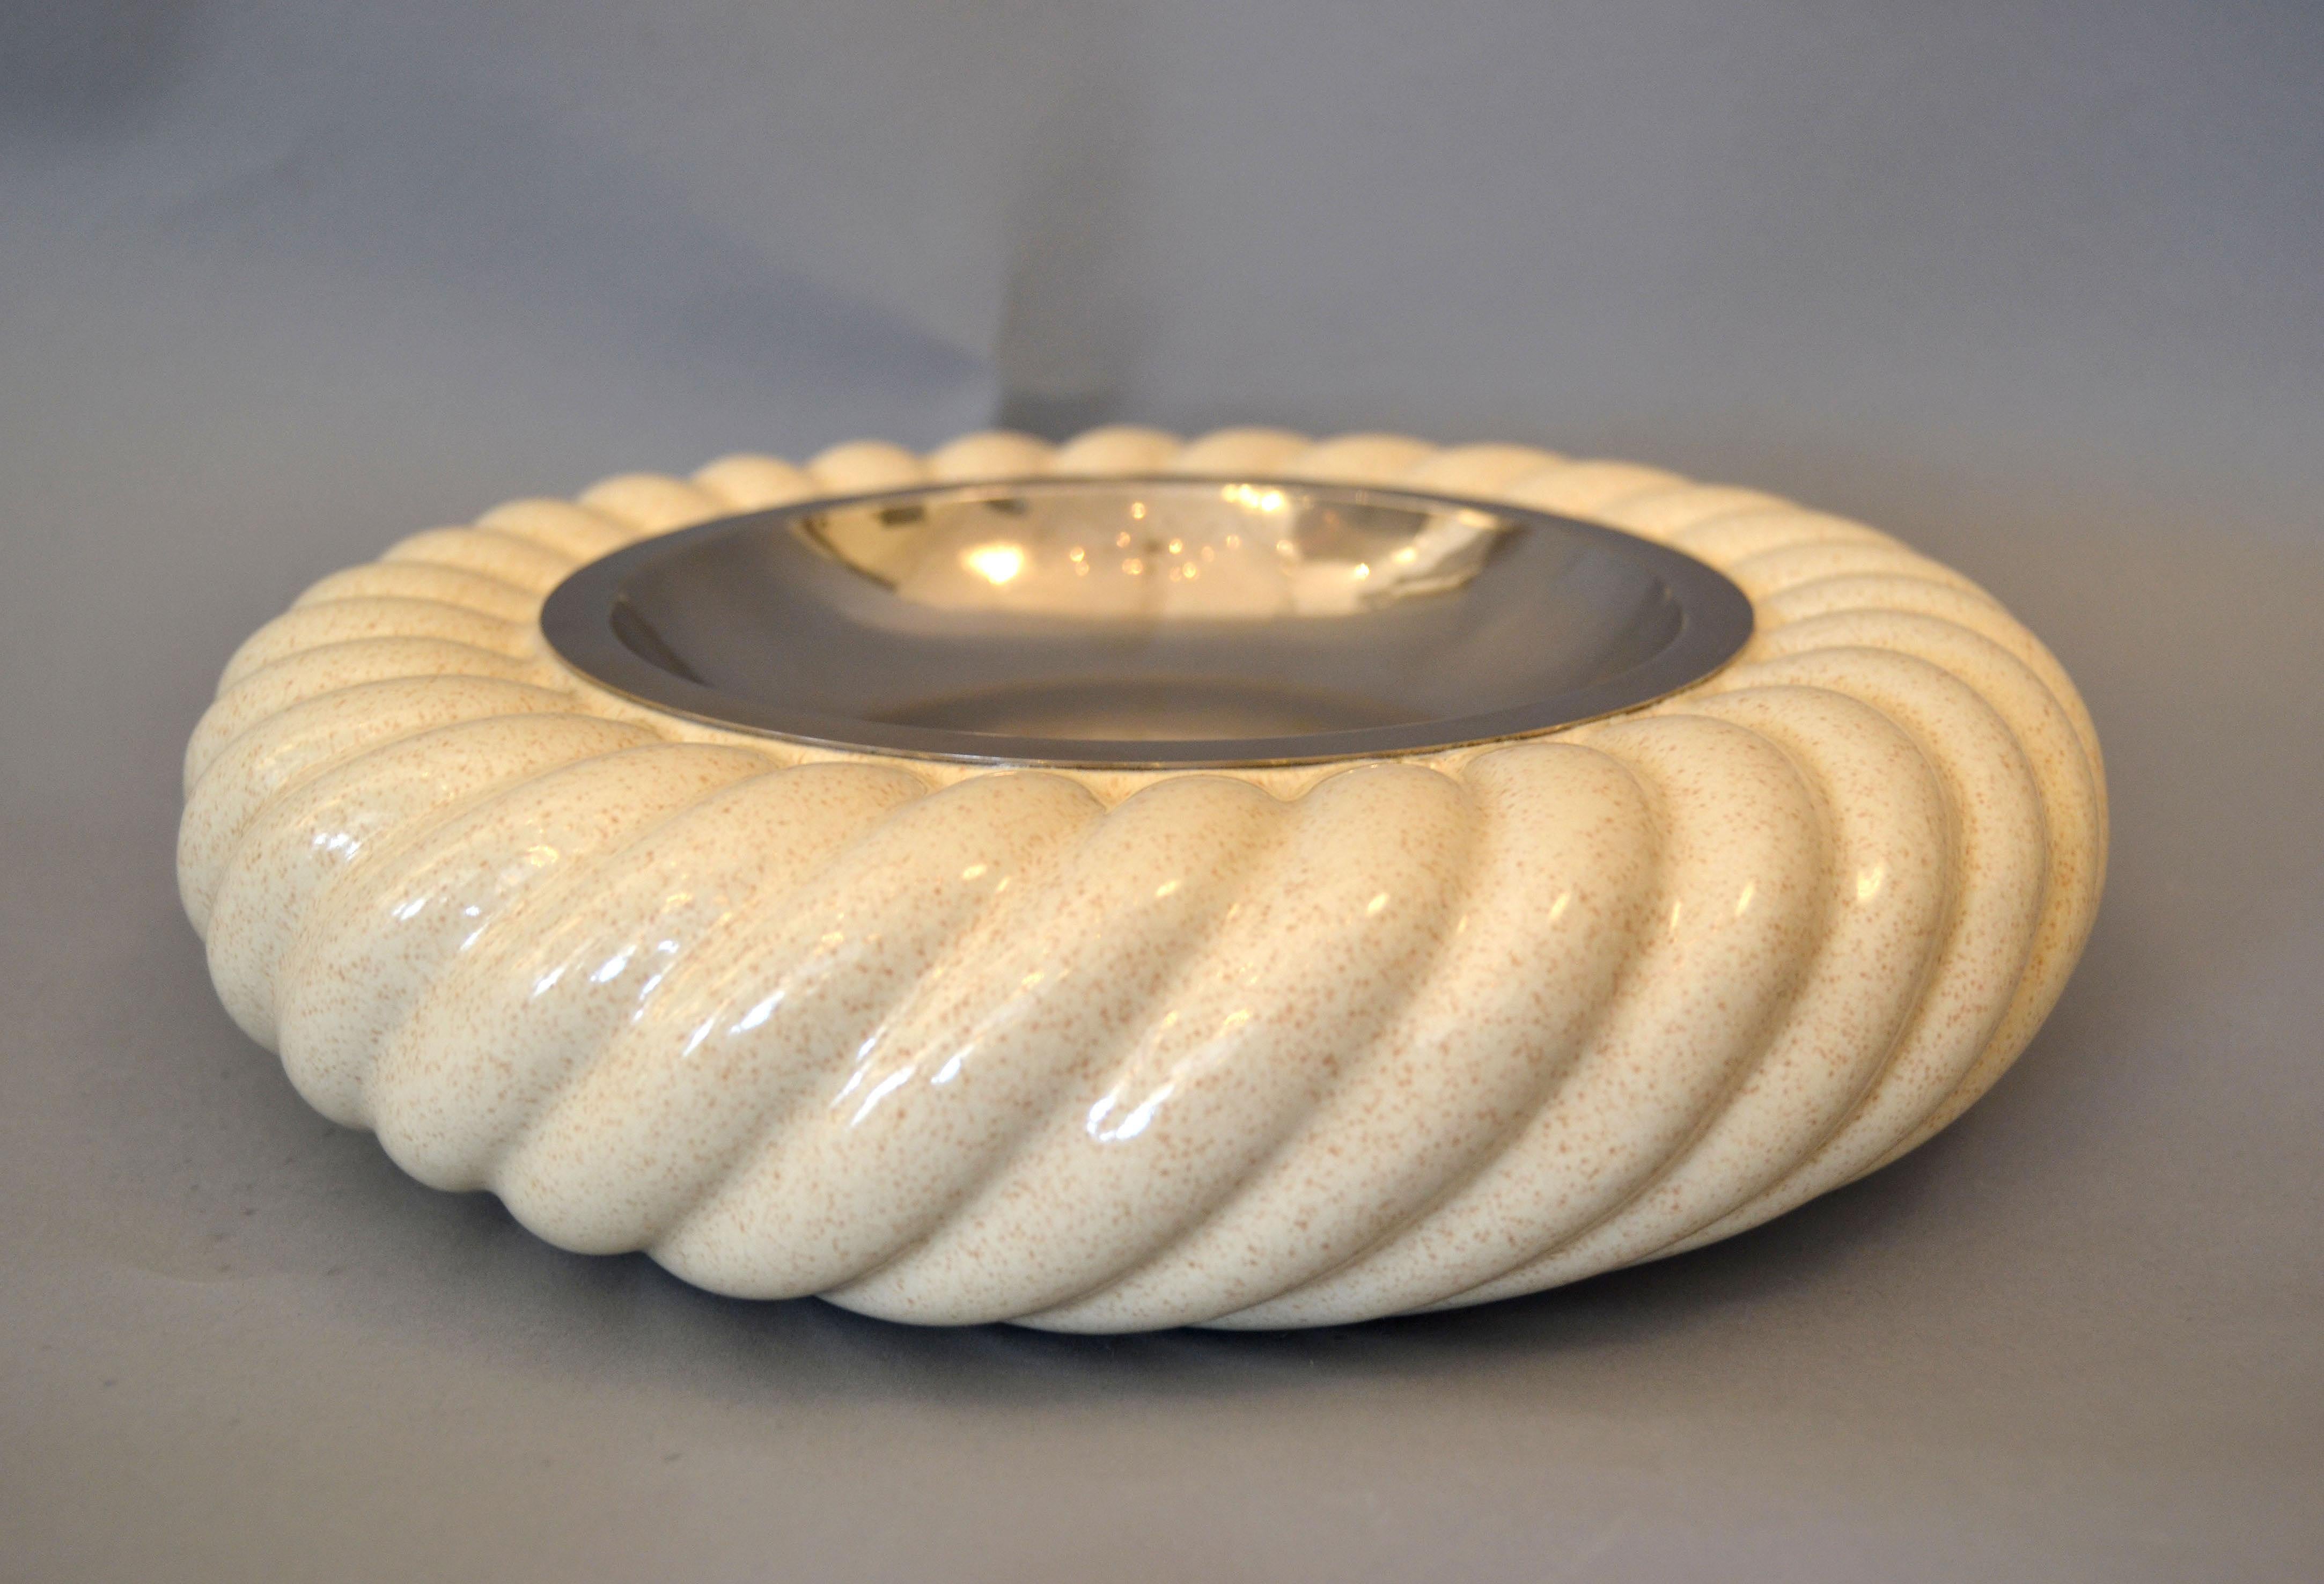 chrome decorative bowl